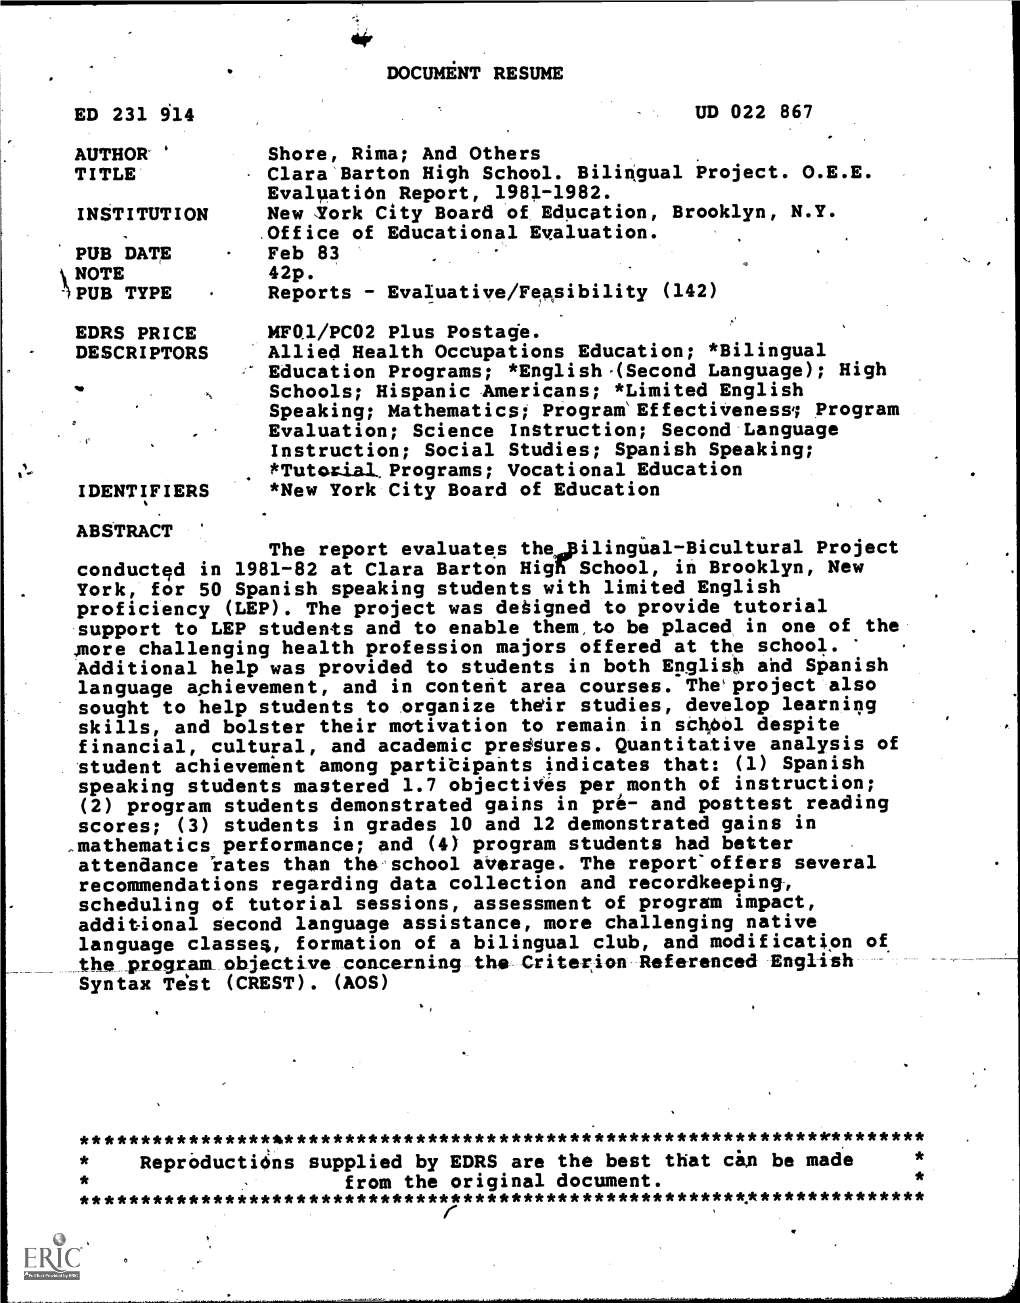 Clara Barton High School. Bilingual Project. OEE Evaluation Report, 1981-1982